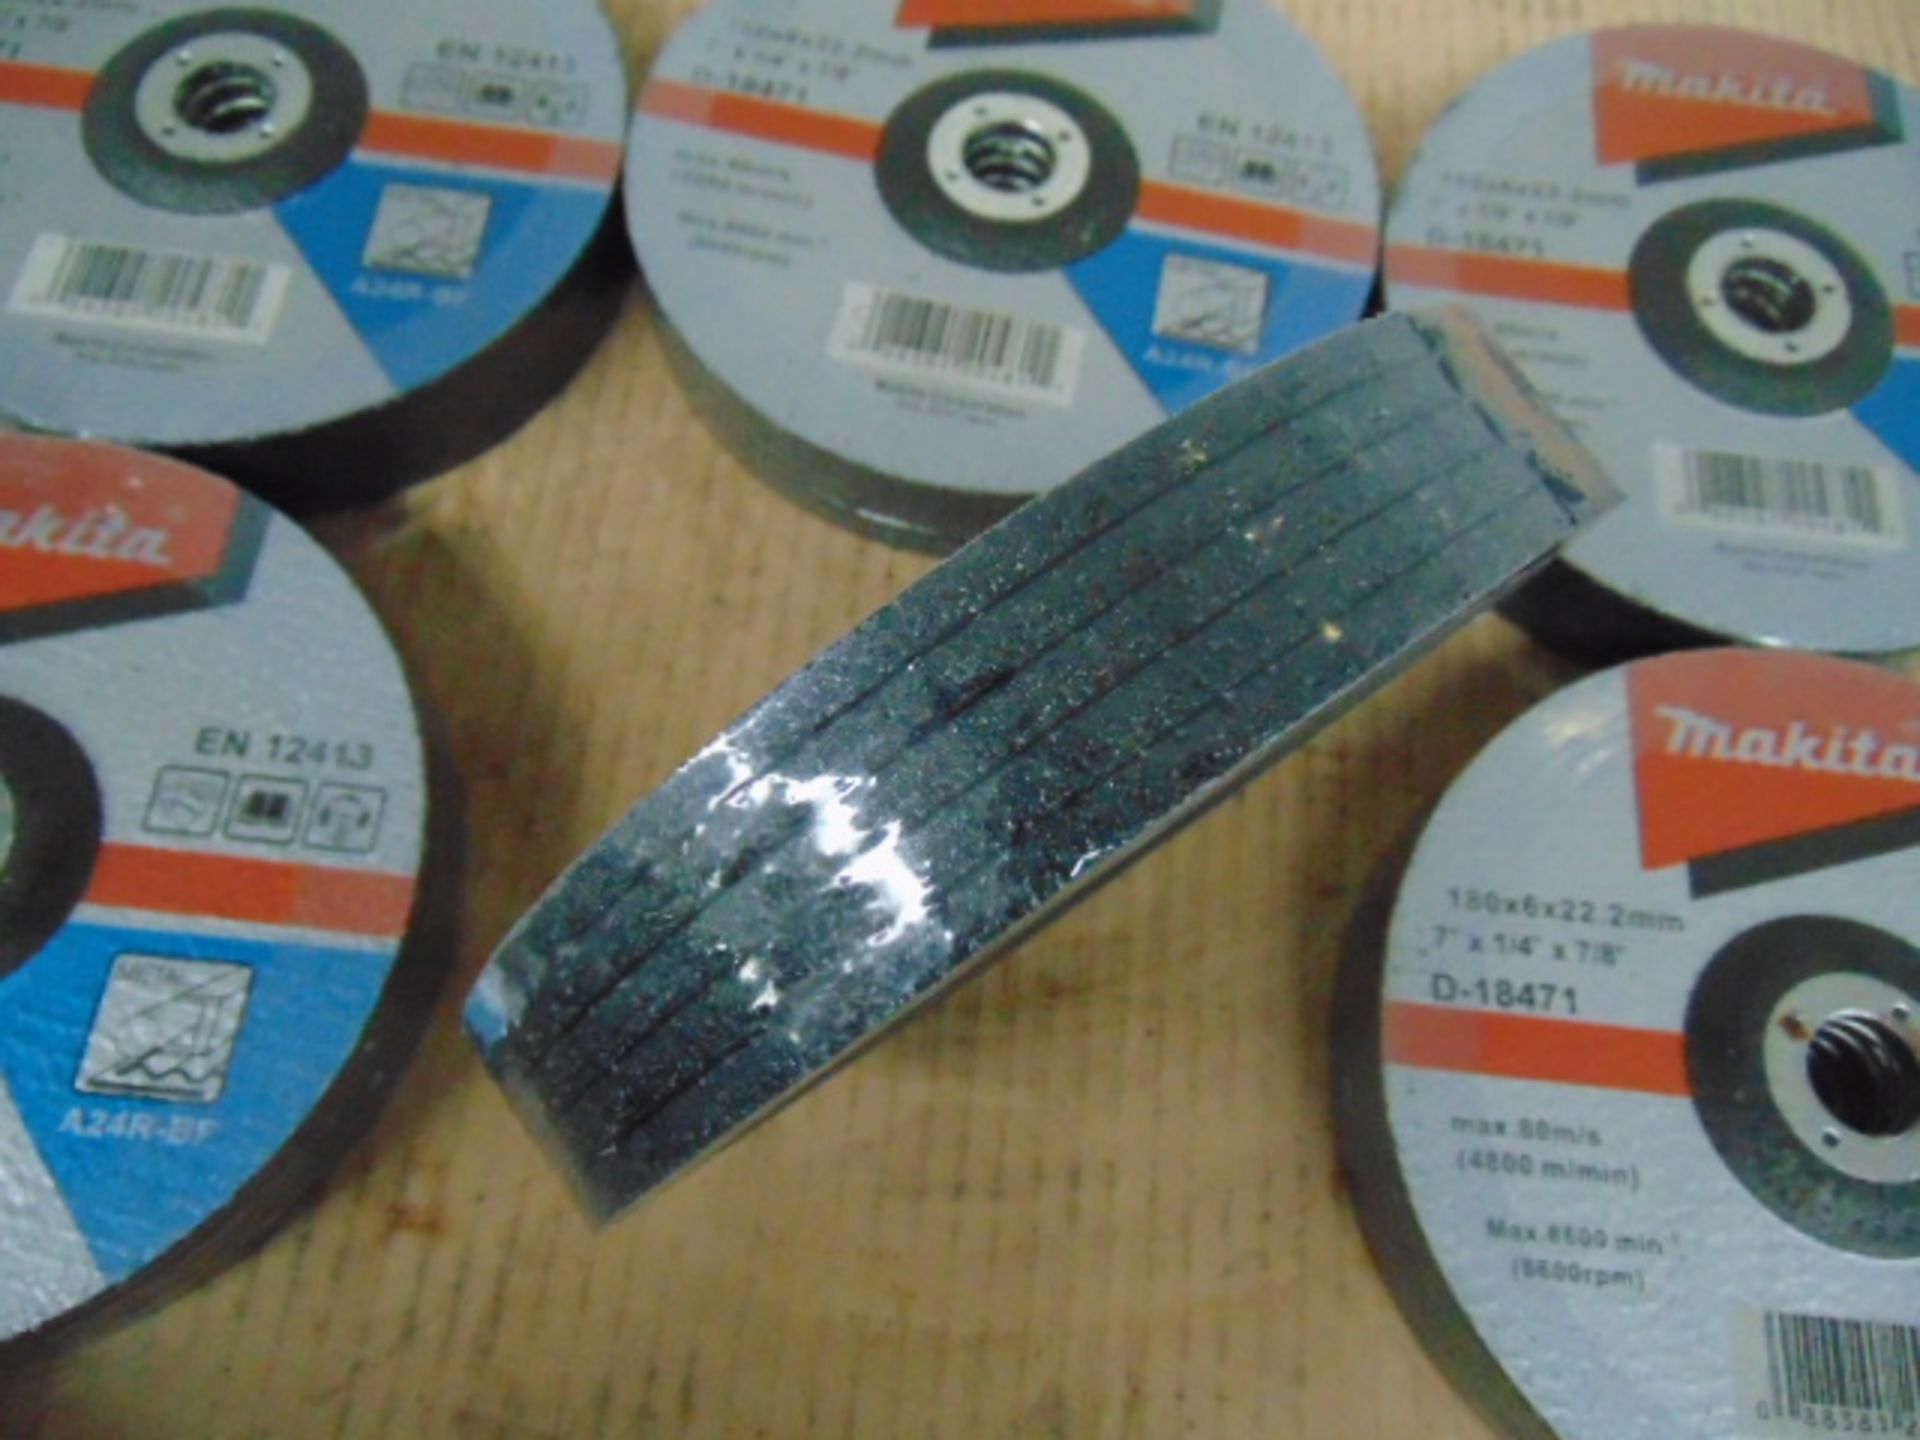 50 x Makita Metal Grinding Disc 180 x 6 x 22.2 A24R-BF D-18471 - Bild 5 aus 6